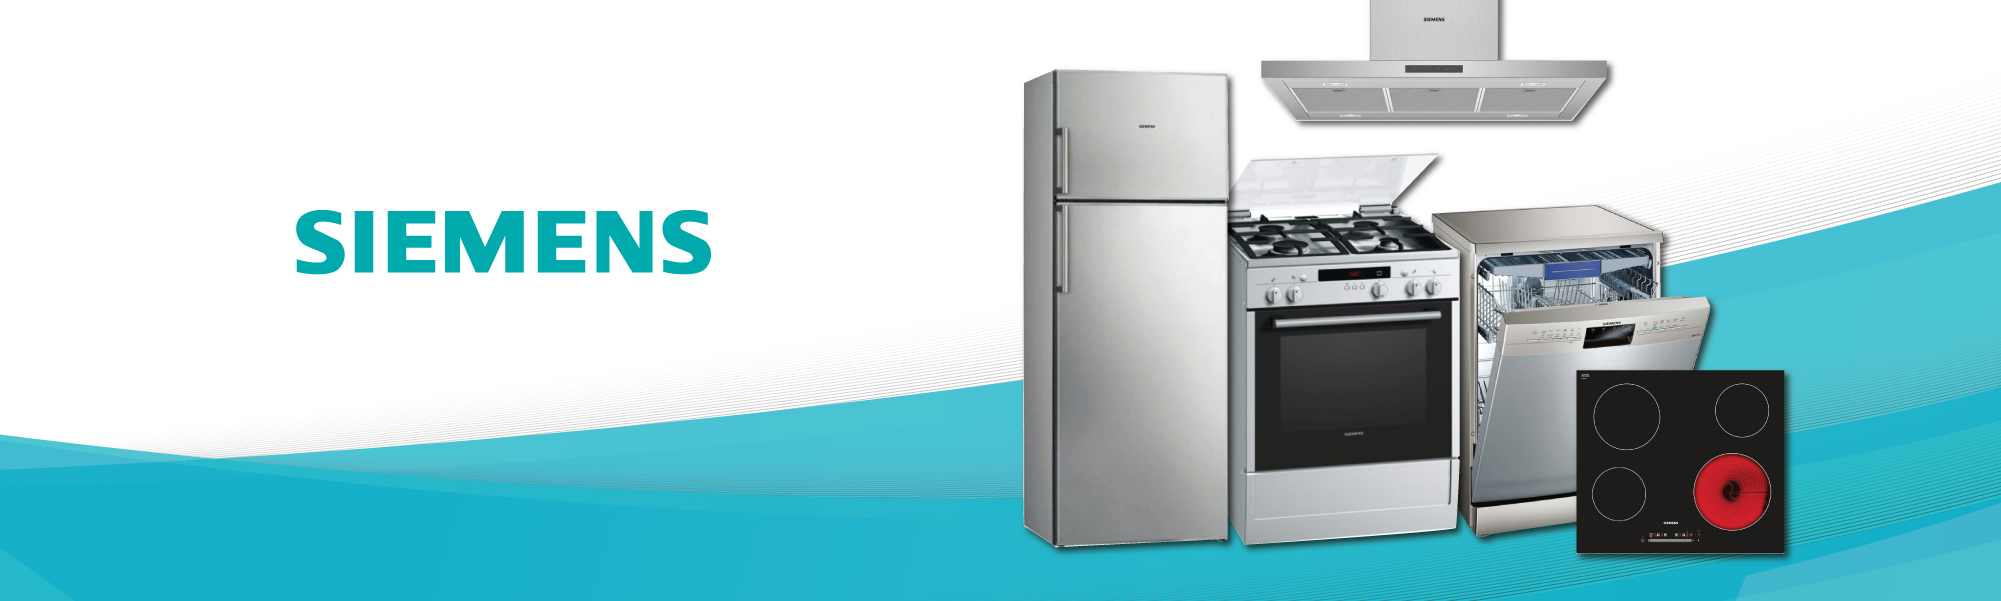 Siemens Service Center: Cooker Repair, Refrigerator Repair, dishwasher Repair, Oven Repair, Hob Repair, Hood Repair, Washer Dryer Repair, Dryer Repair, Washing Machine Repair